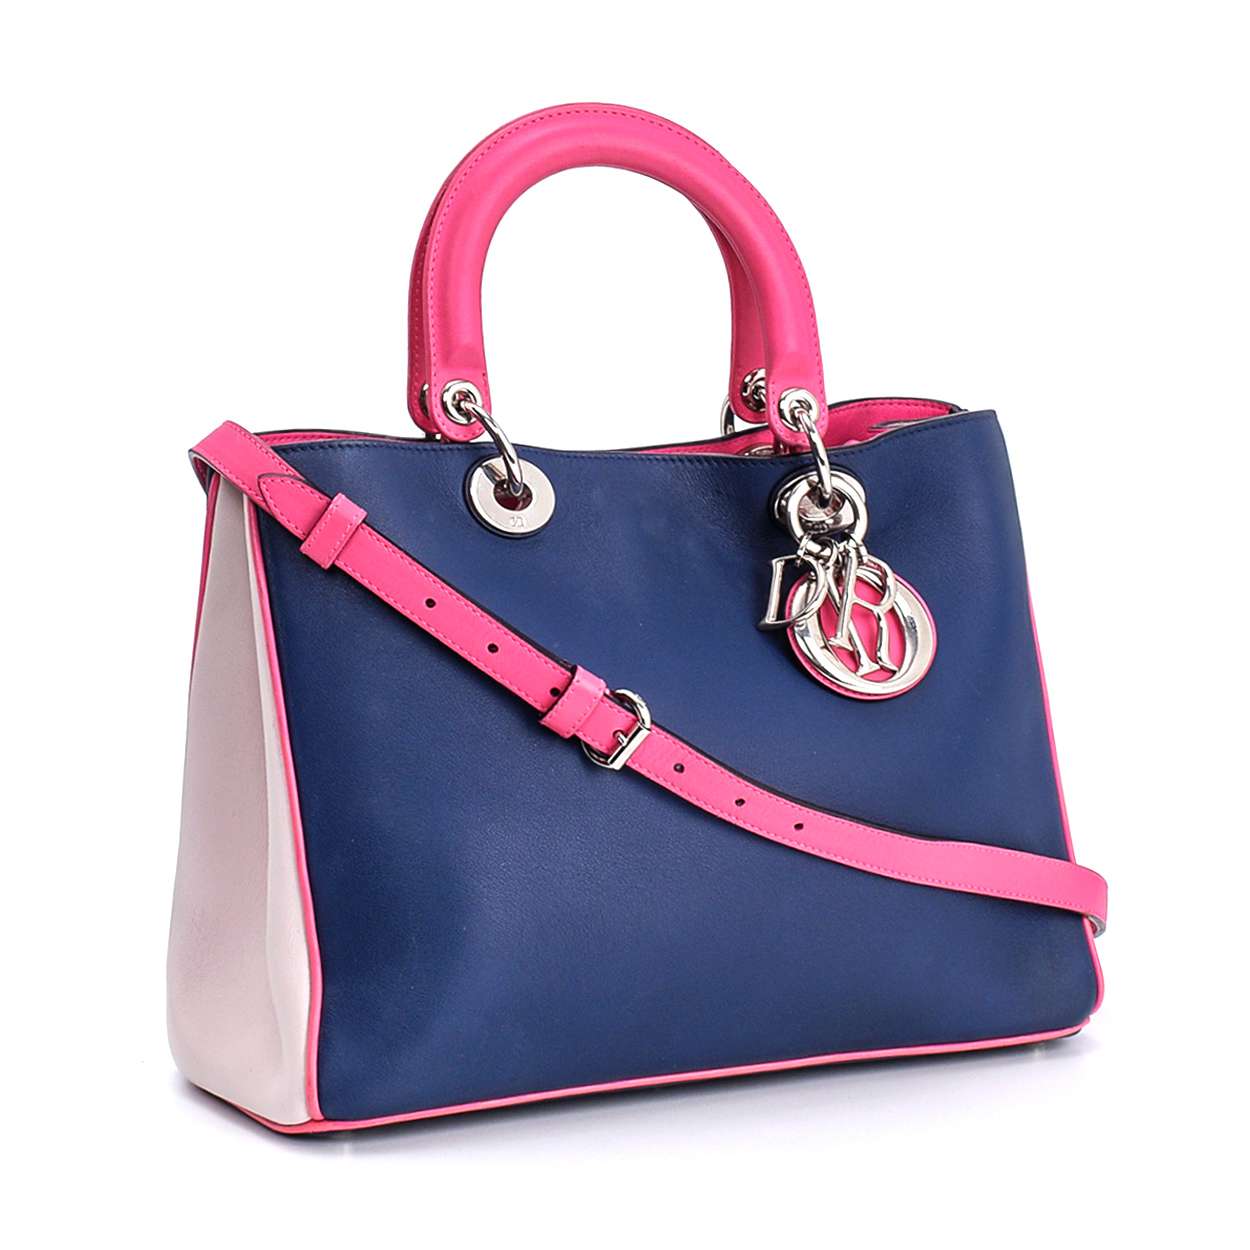 Christian Dior - Tricolor Smooth Leather Medium Diorissimo Bag